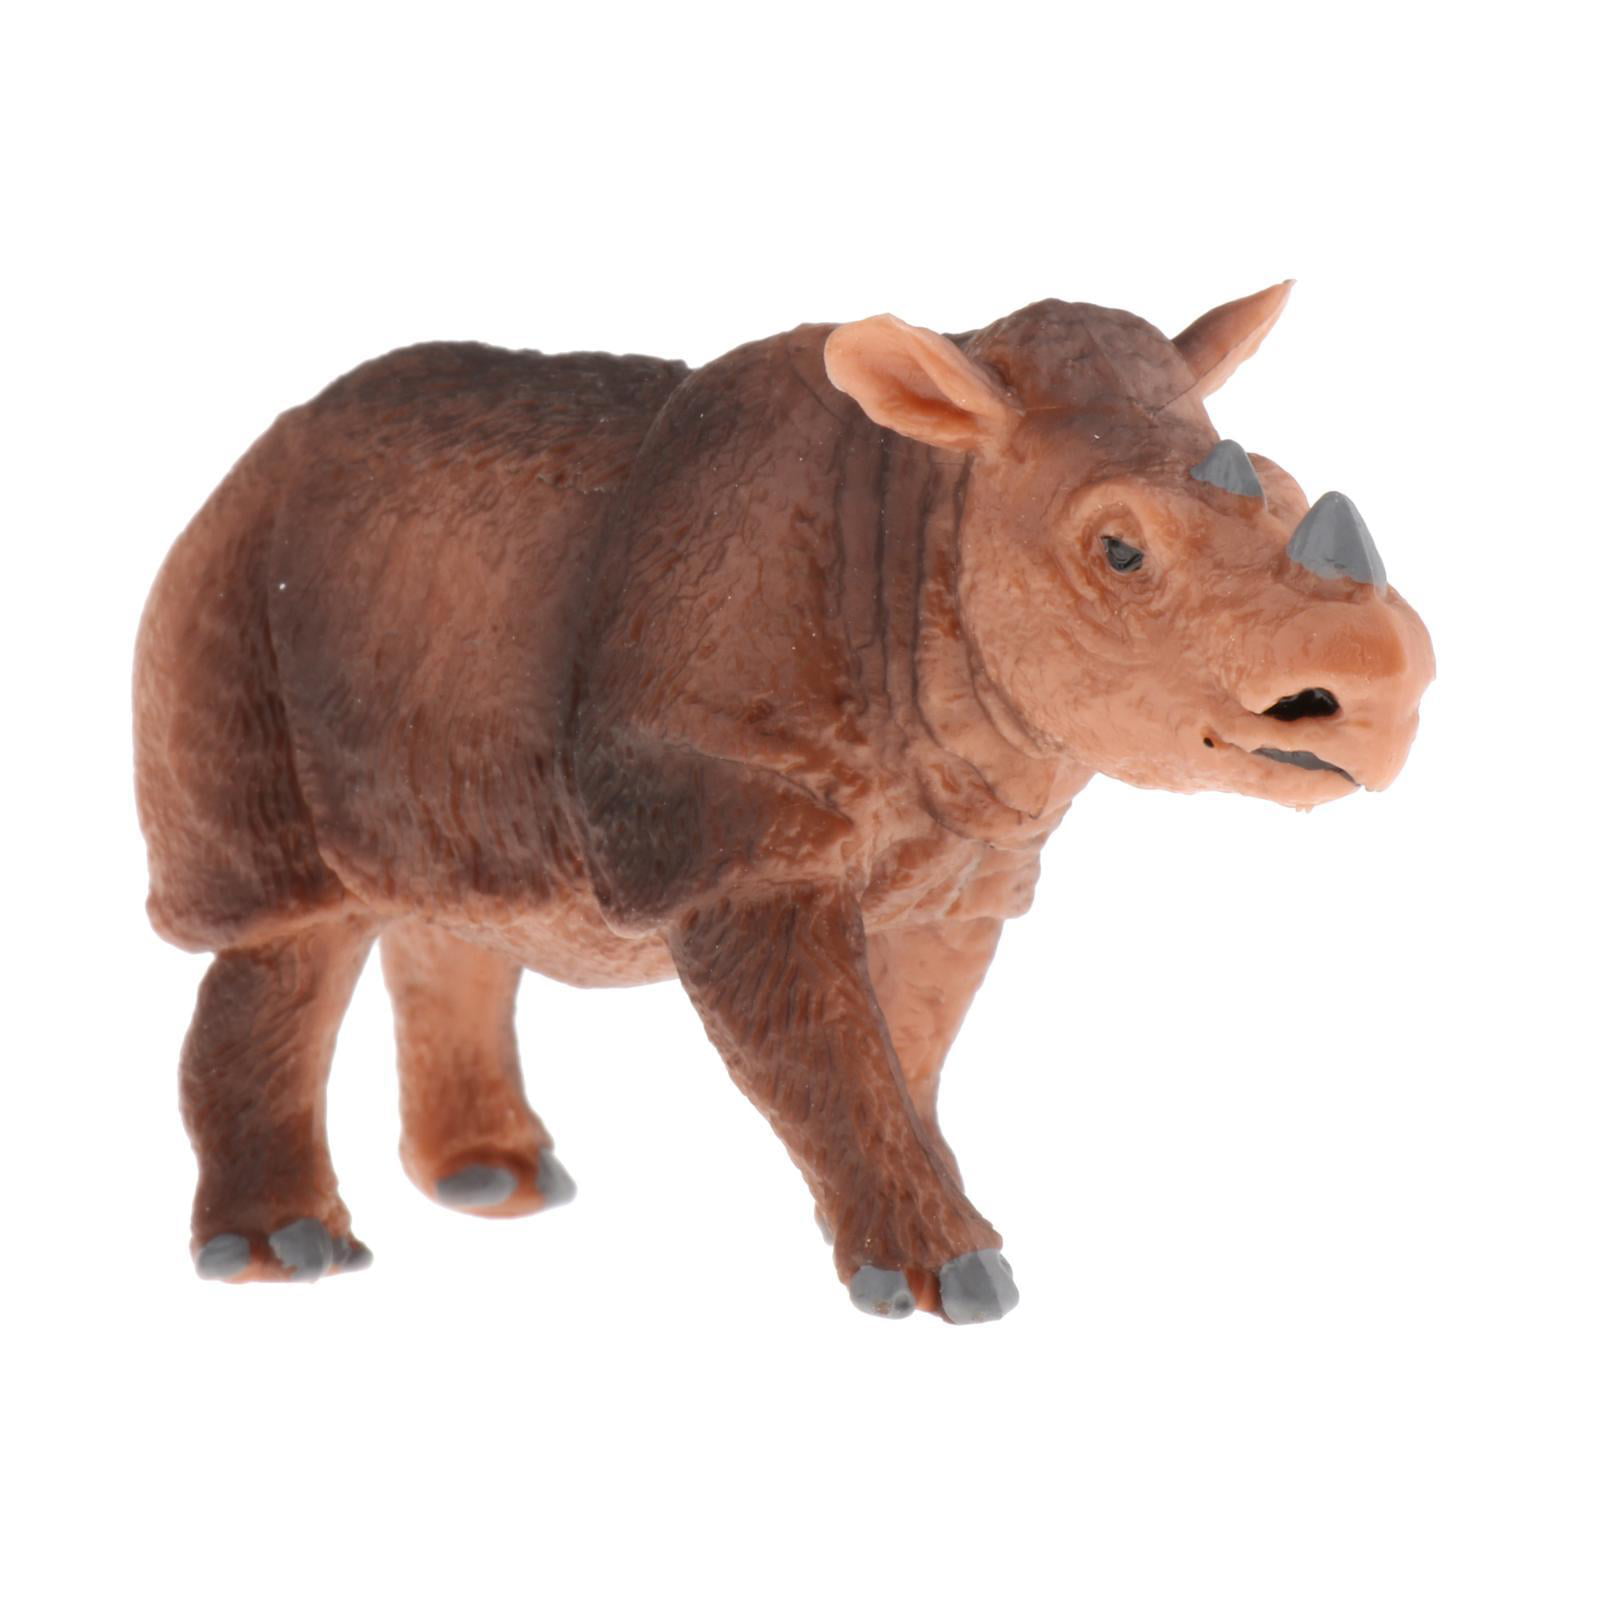 Animal Model Figurine Educational Toy Simulation Rhinoceros Kid Novelty #3 